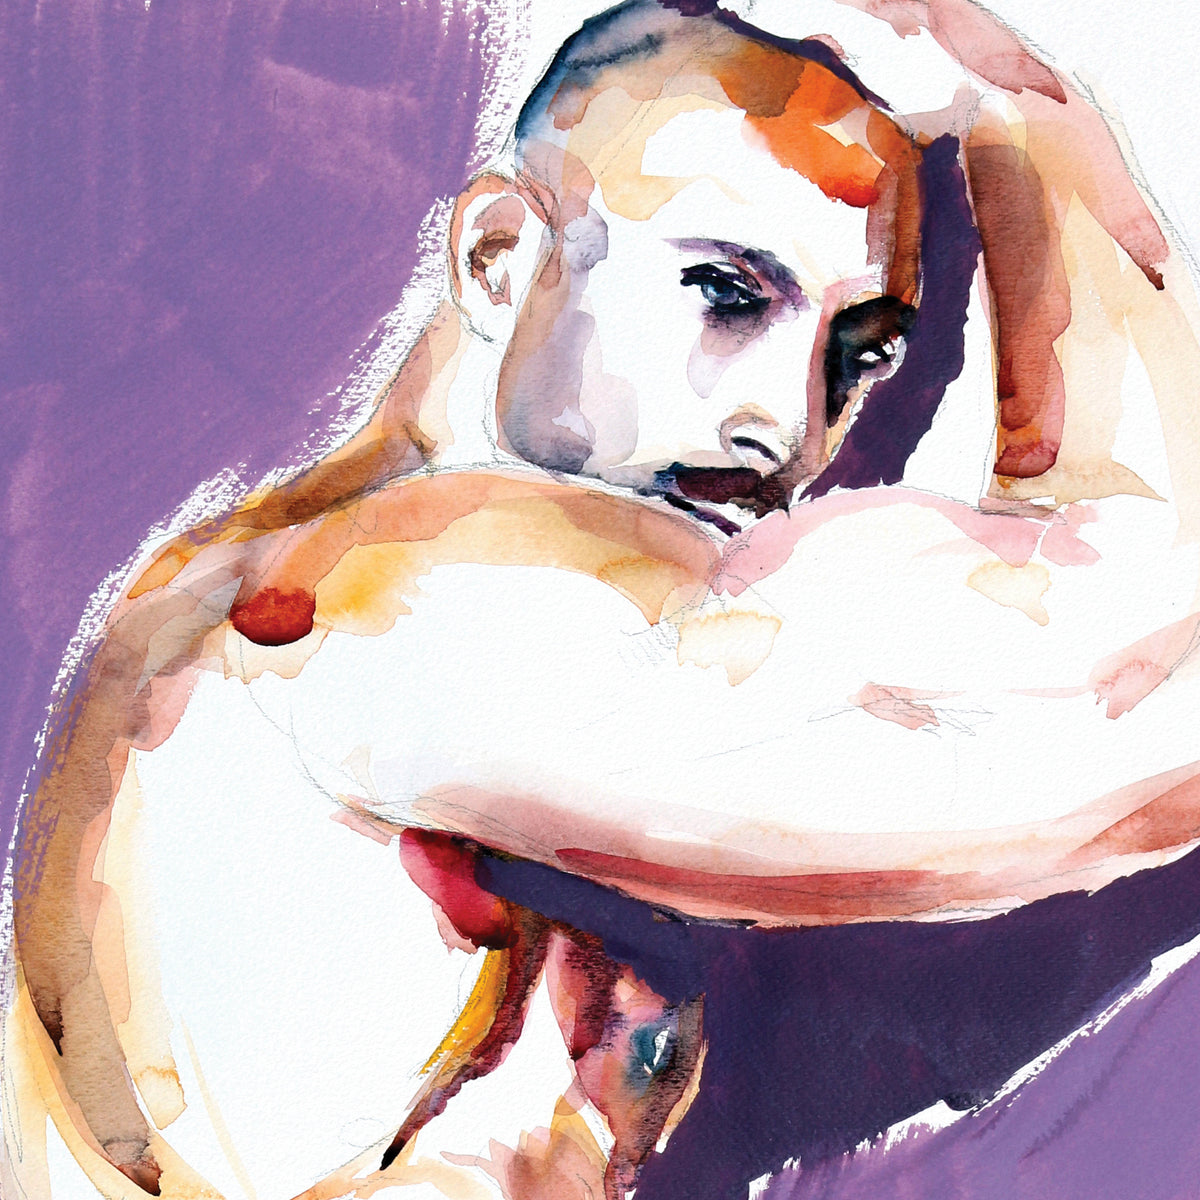 Muscular Man in Doorway, Intense Gaze, Half-Concealed Face - Giclee Art Print